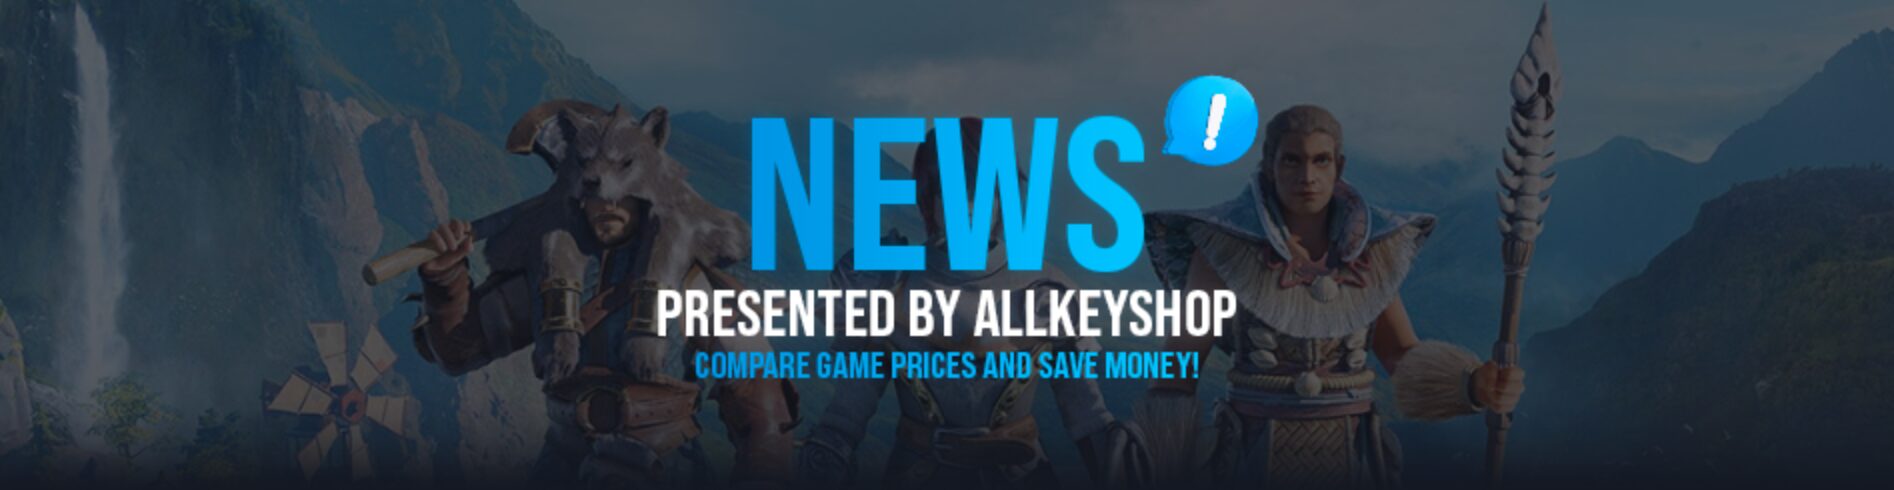 News Presented by Allkeyshop